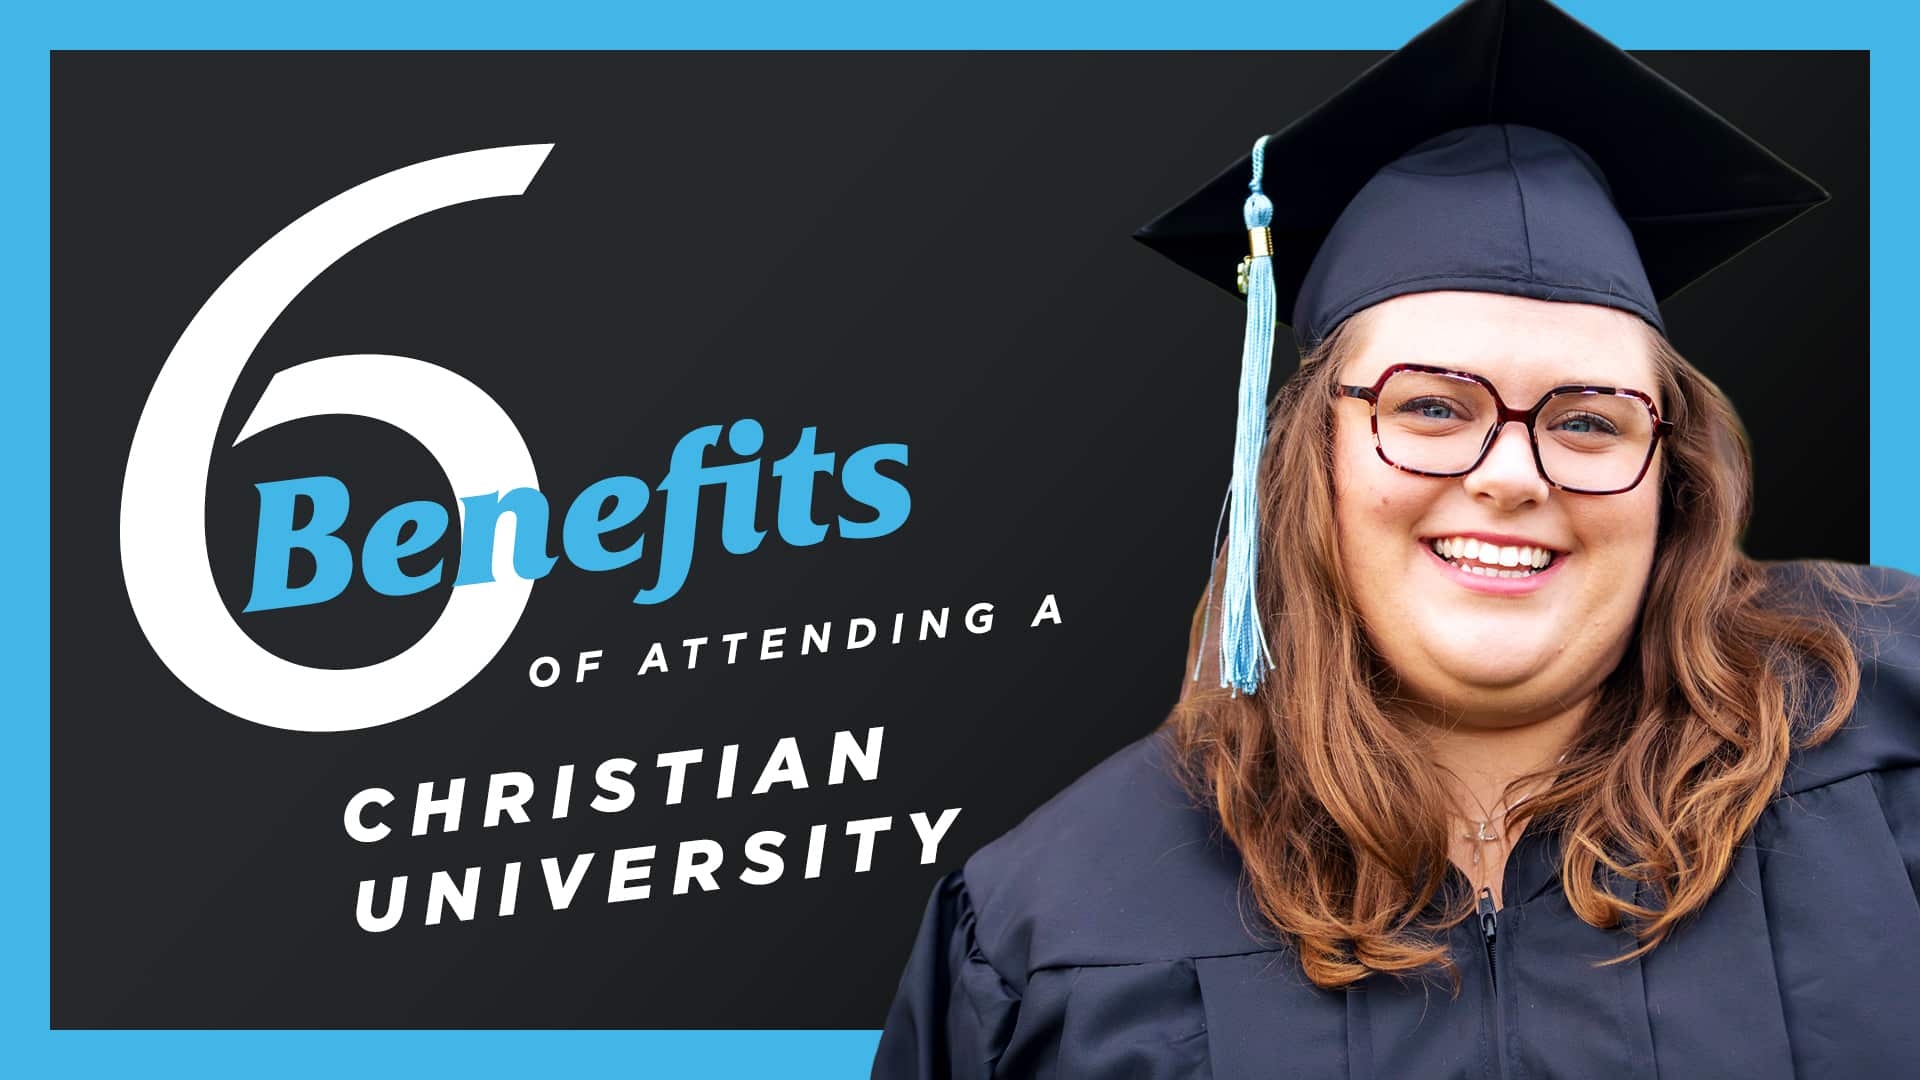 Christian-University-6-Benefits-of-Attending